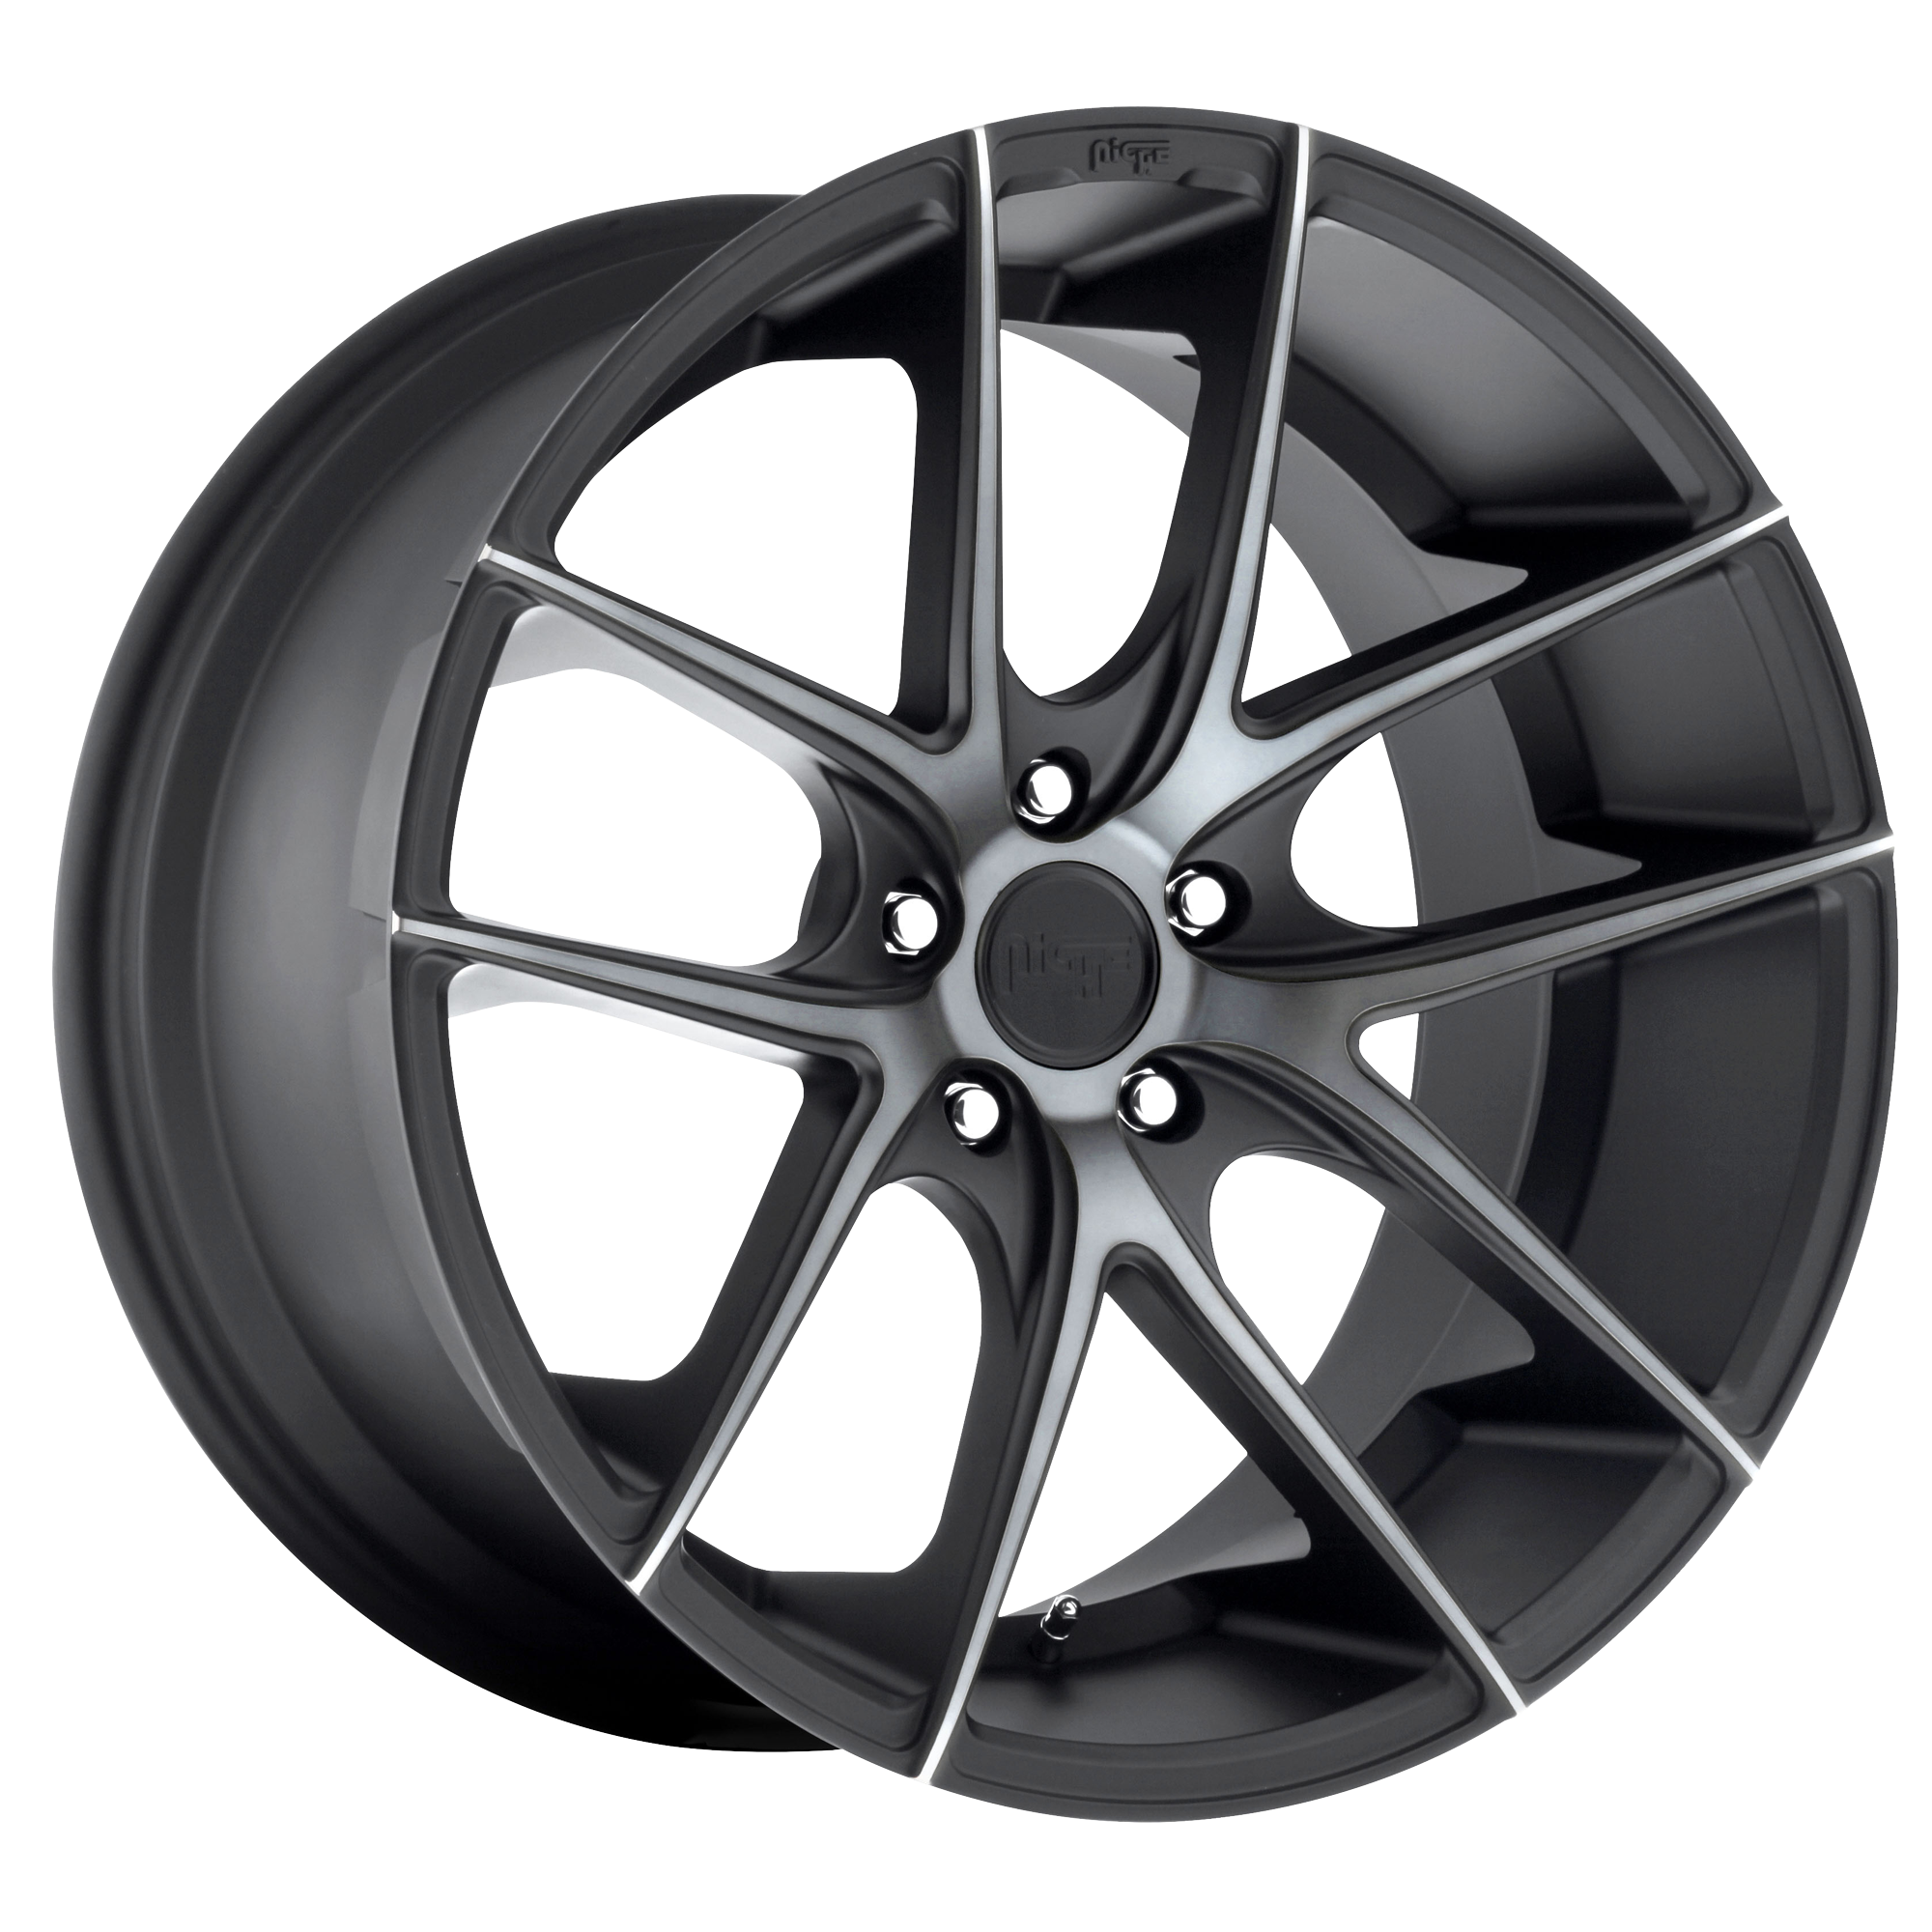 TARGA 18x9.5 5x114.30 MATTE BLACK DOUBLE DARK TINT (40 mm) - Tires and Engine Performance